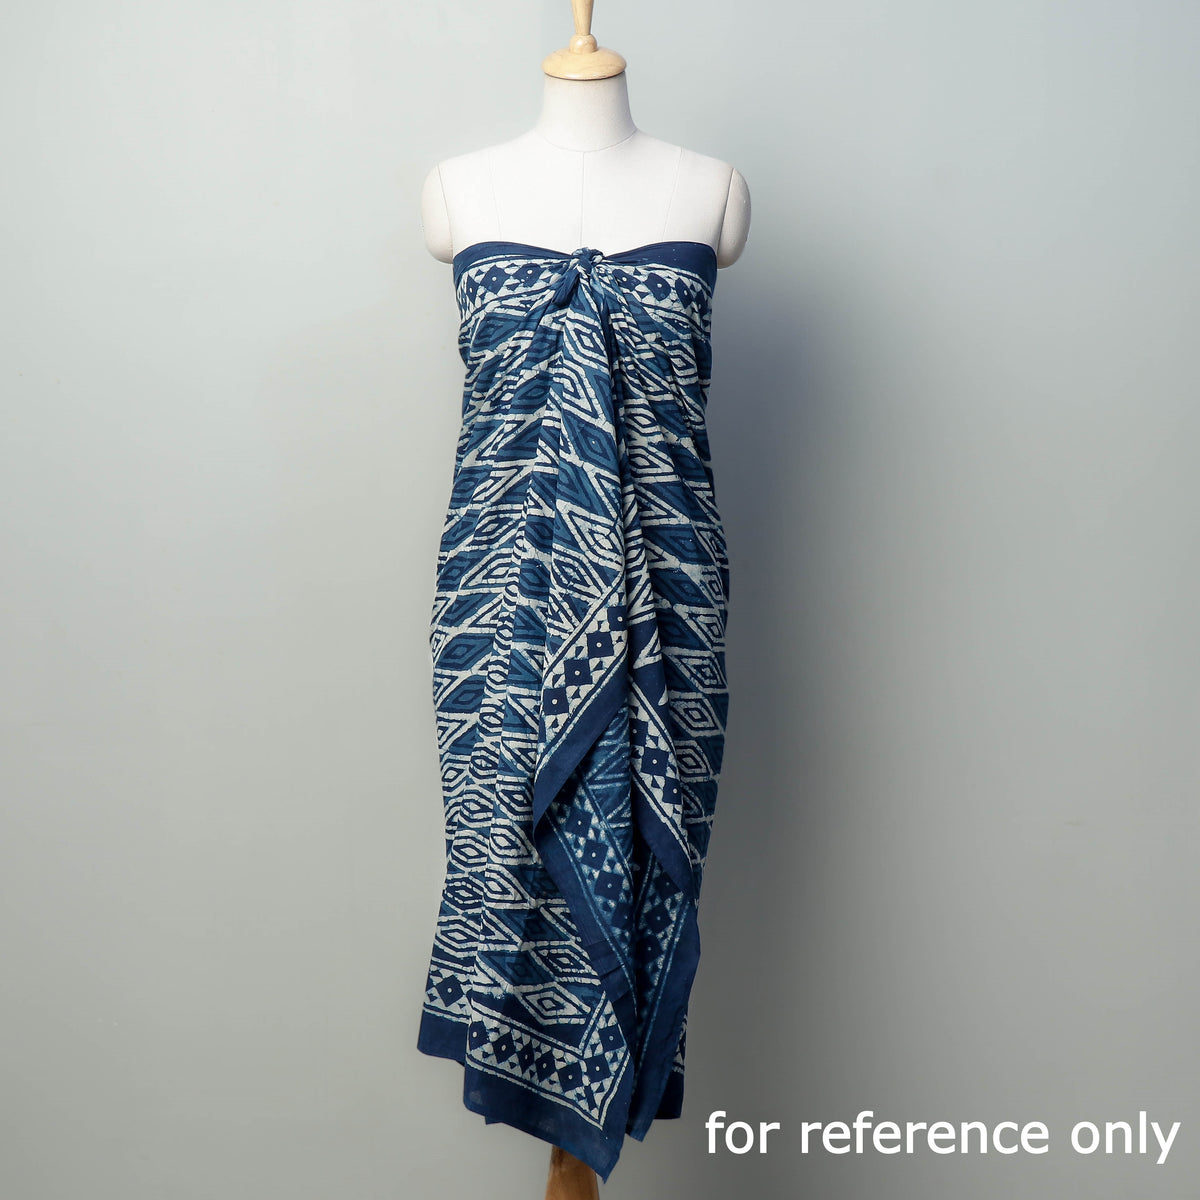 Shibori Tie-Dye Soft Cotton Dupatta/Wrap Sarong Pareo/Beach Wear